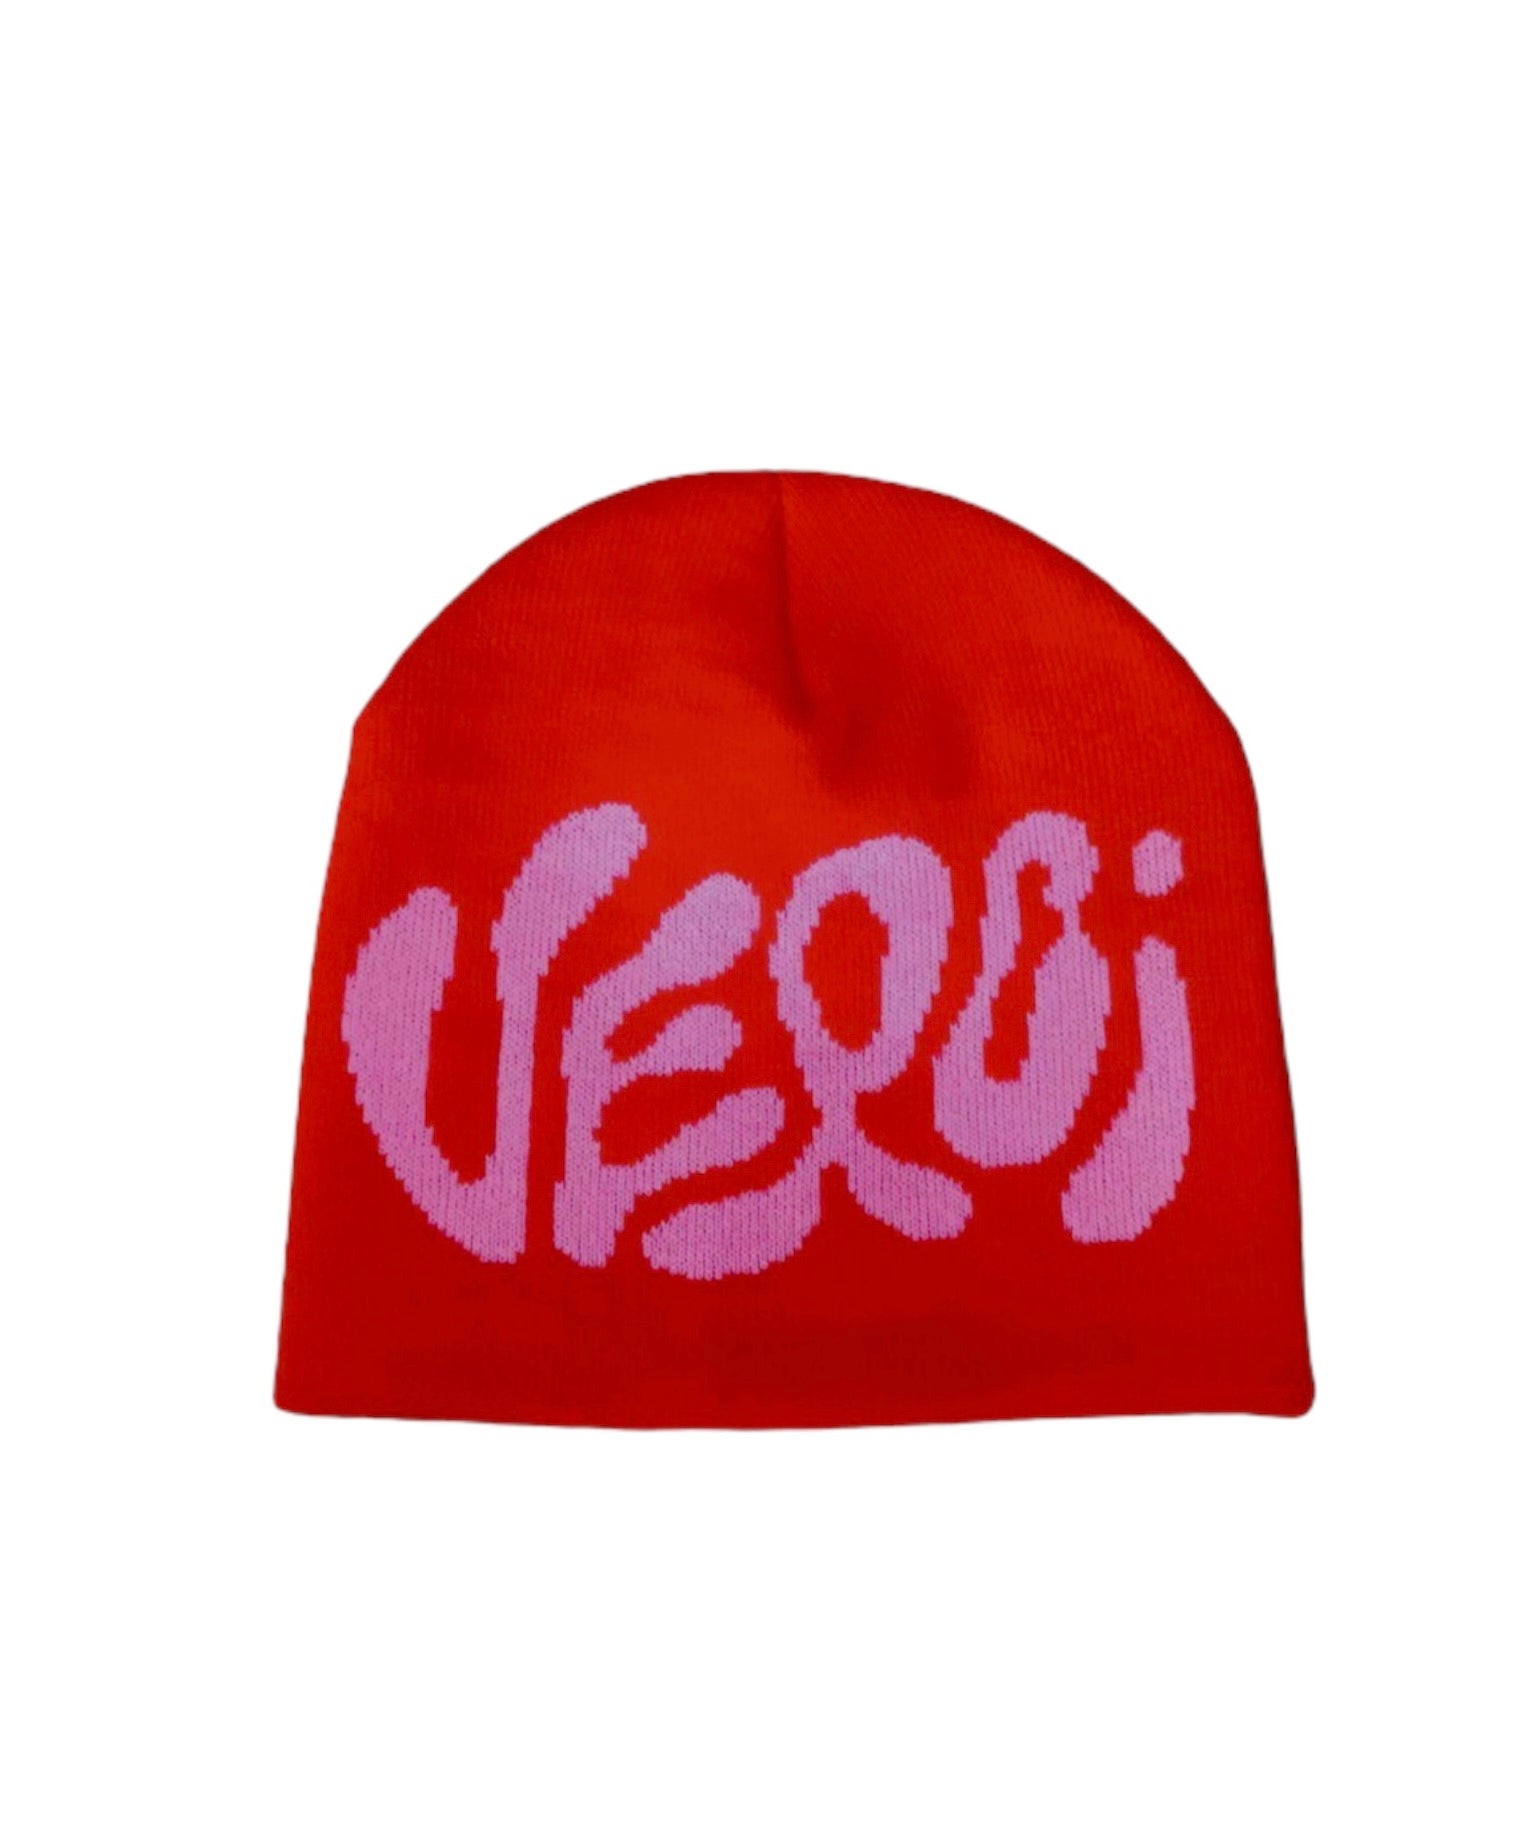 Red/pink beanie hat